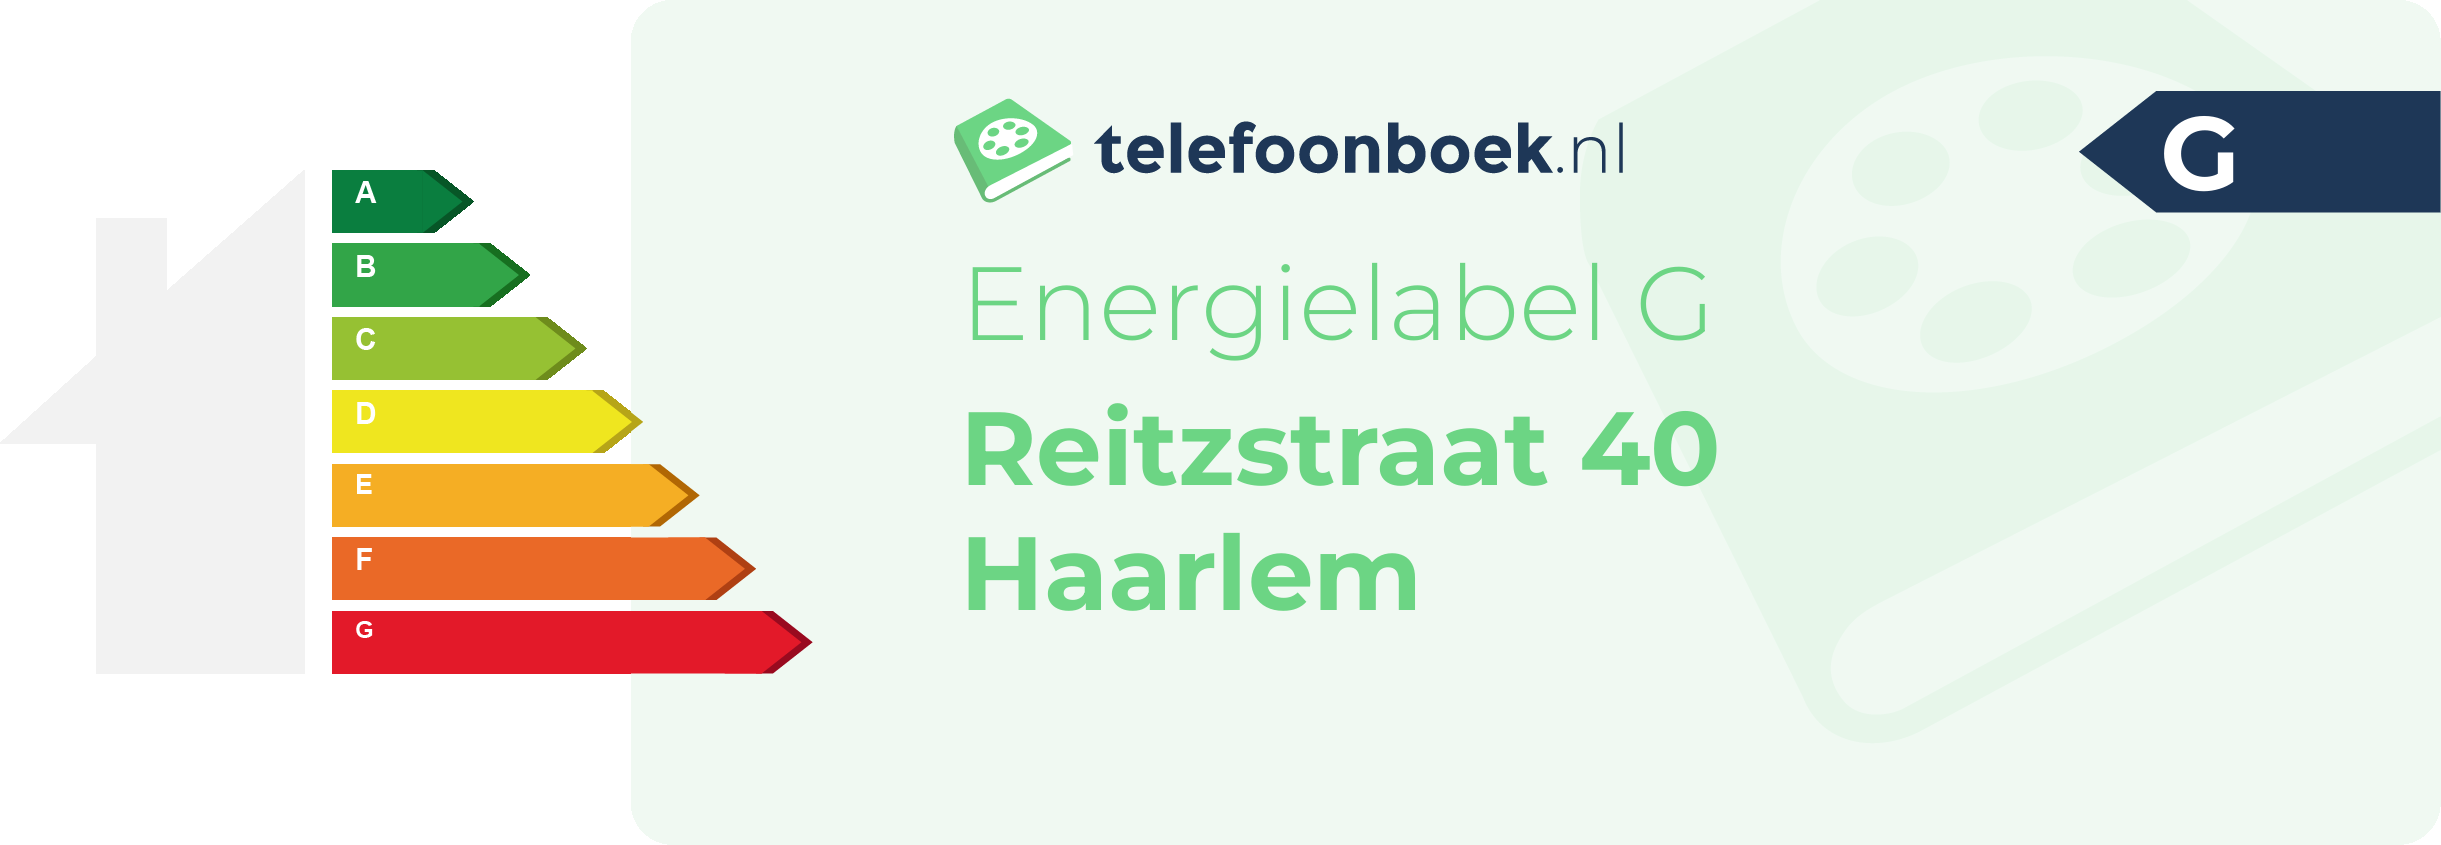 Energielabel Reitzstraat 40 Haarlem